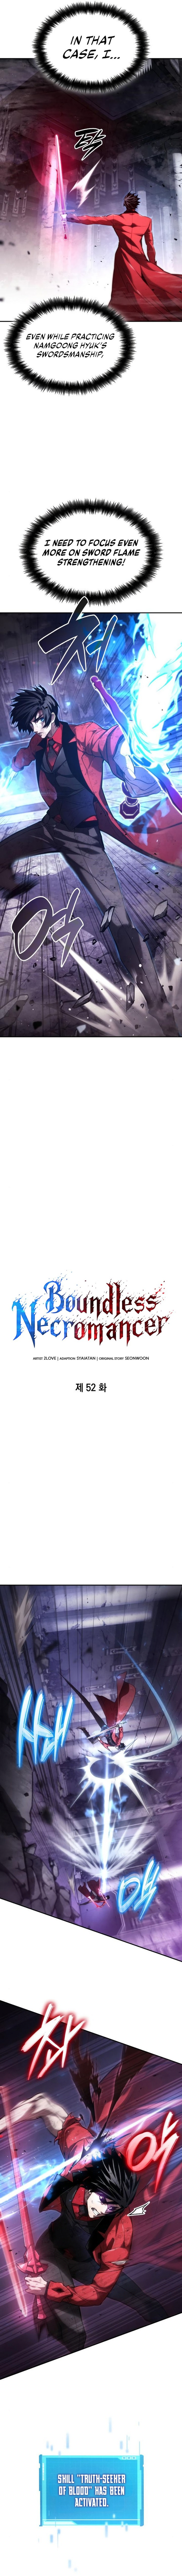 Boundless Necromancer 52 4